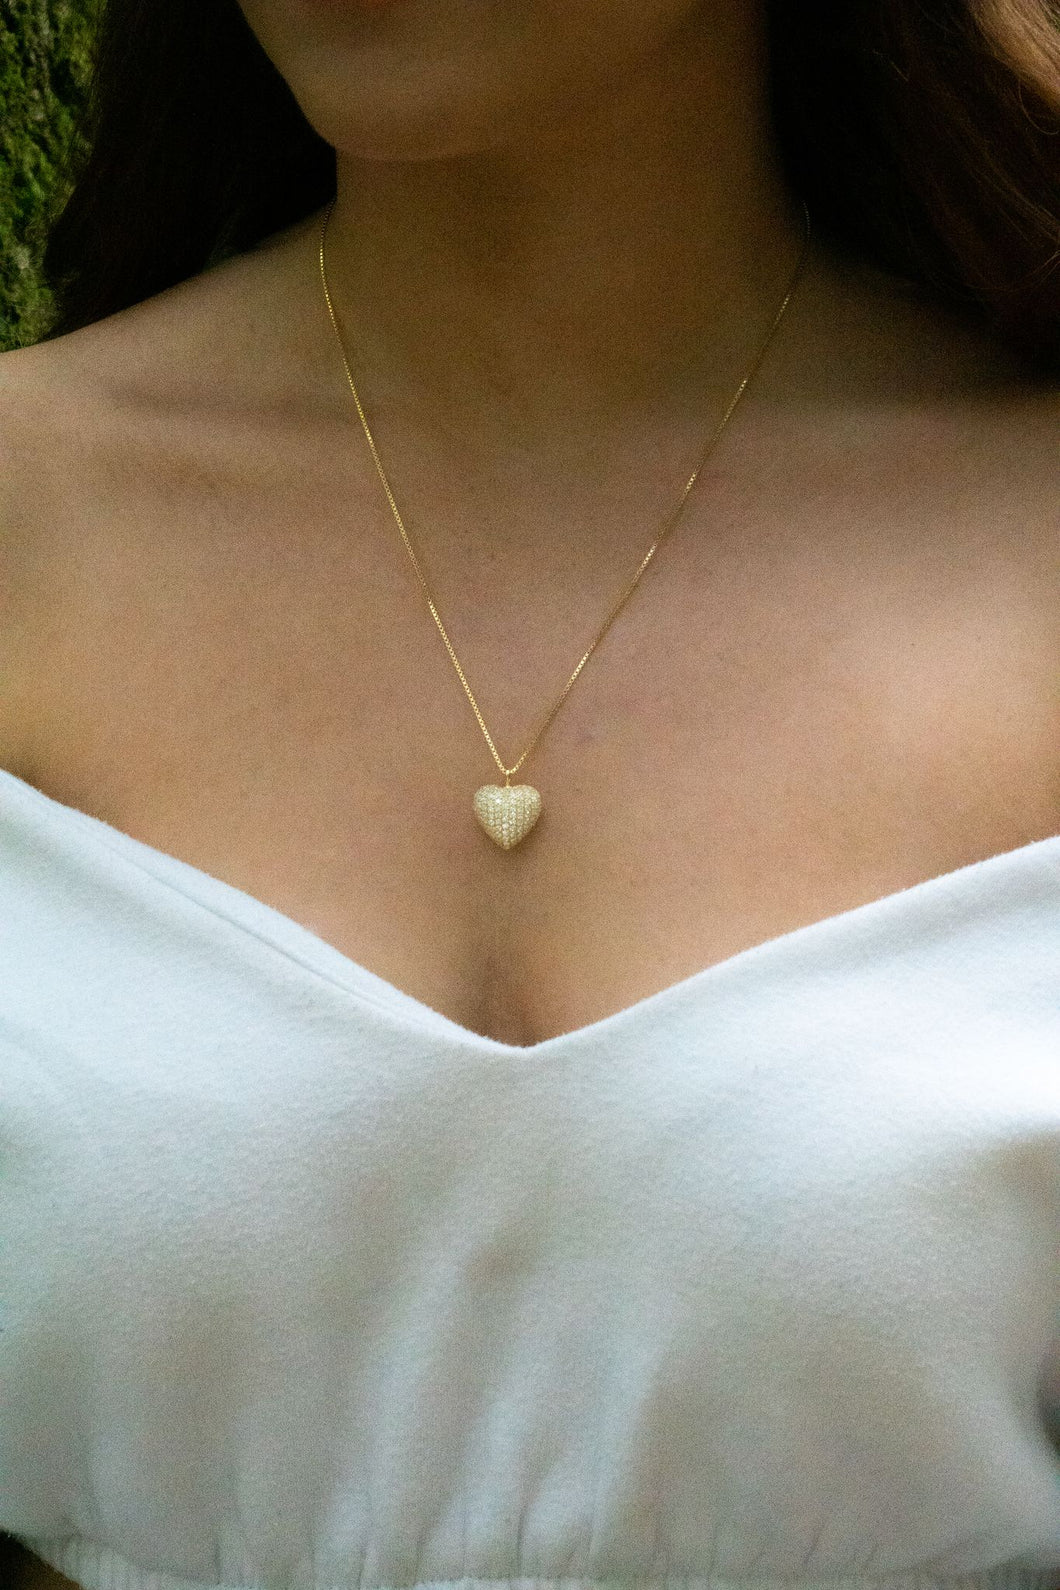 Gold Swarovski Style Crystal Heart Pendant